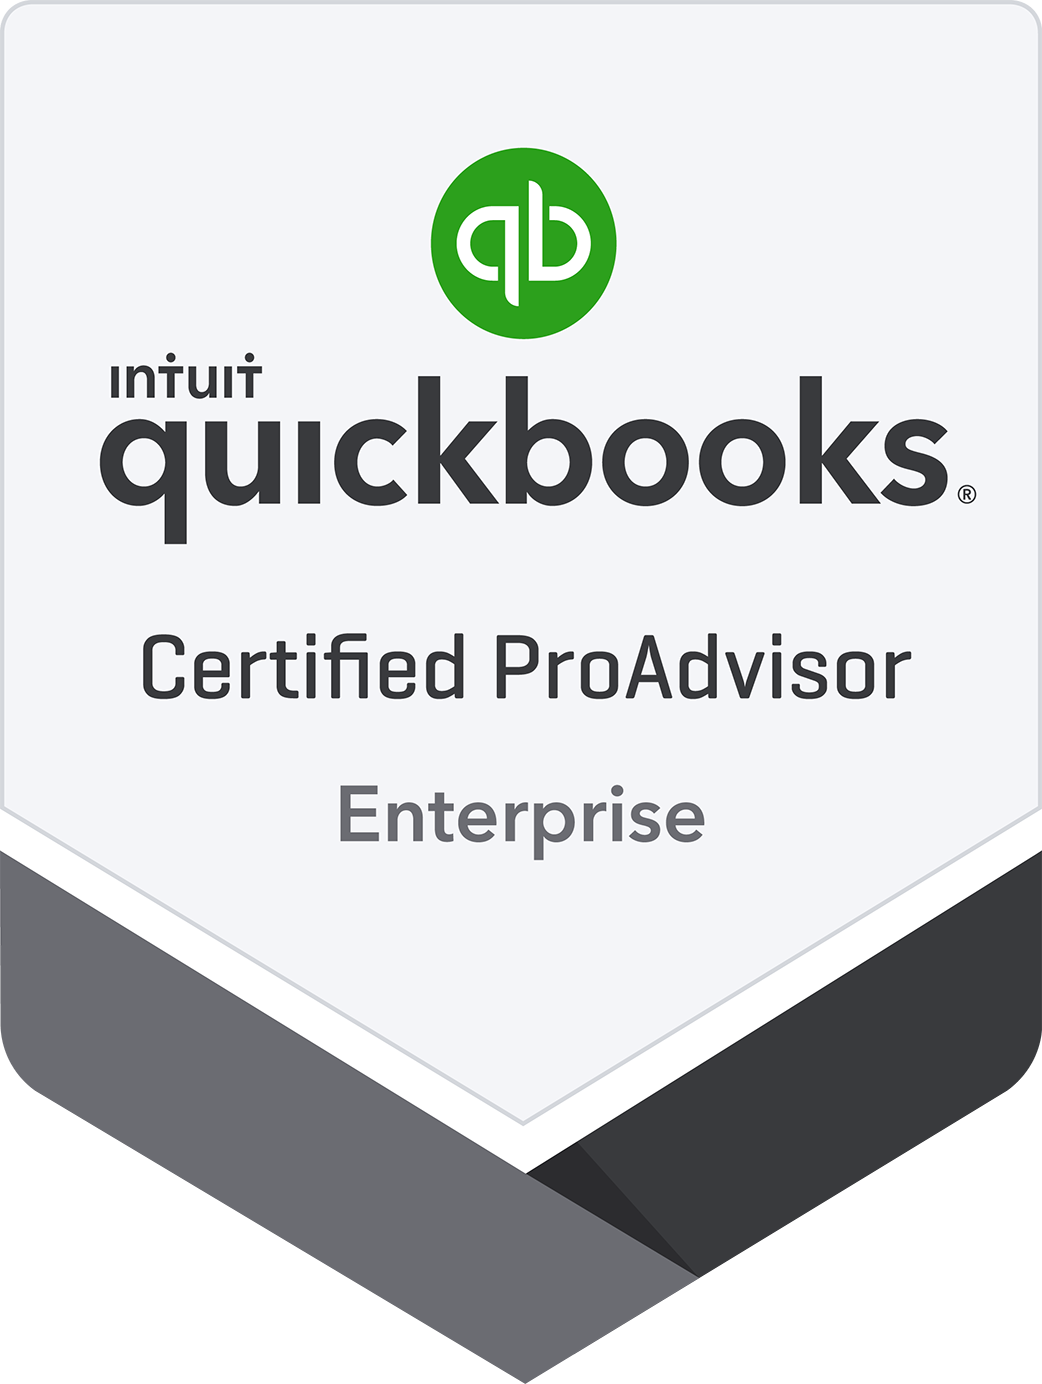 QuickBooks Certified ProAdvisor - QuickBooks Online Certification